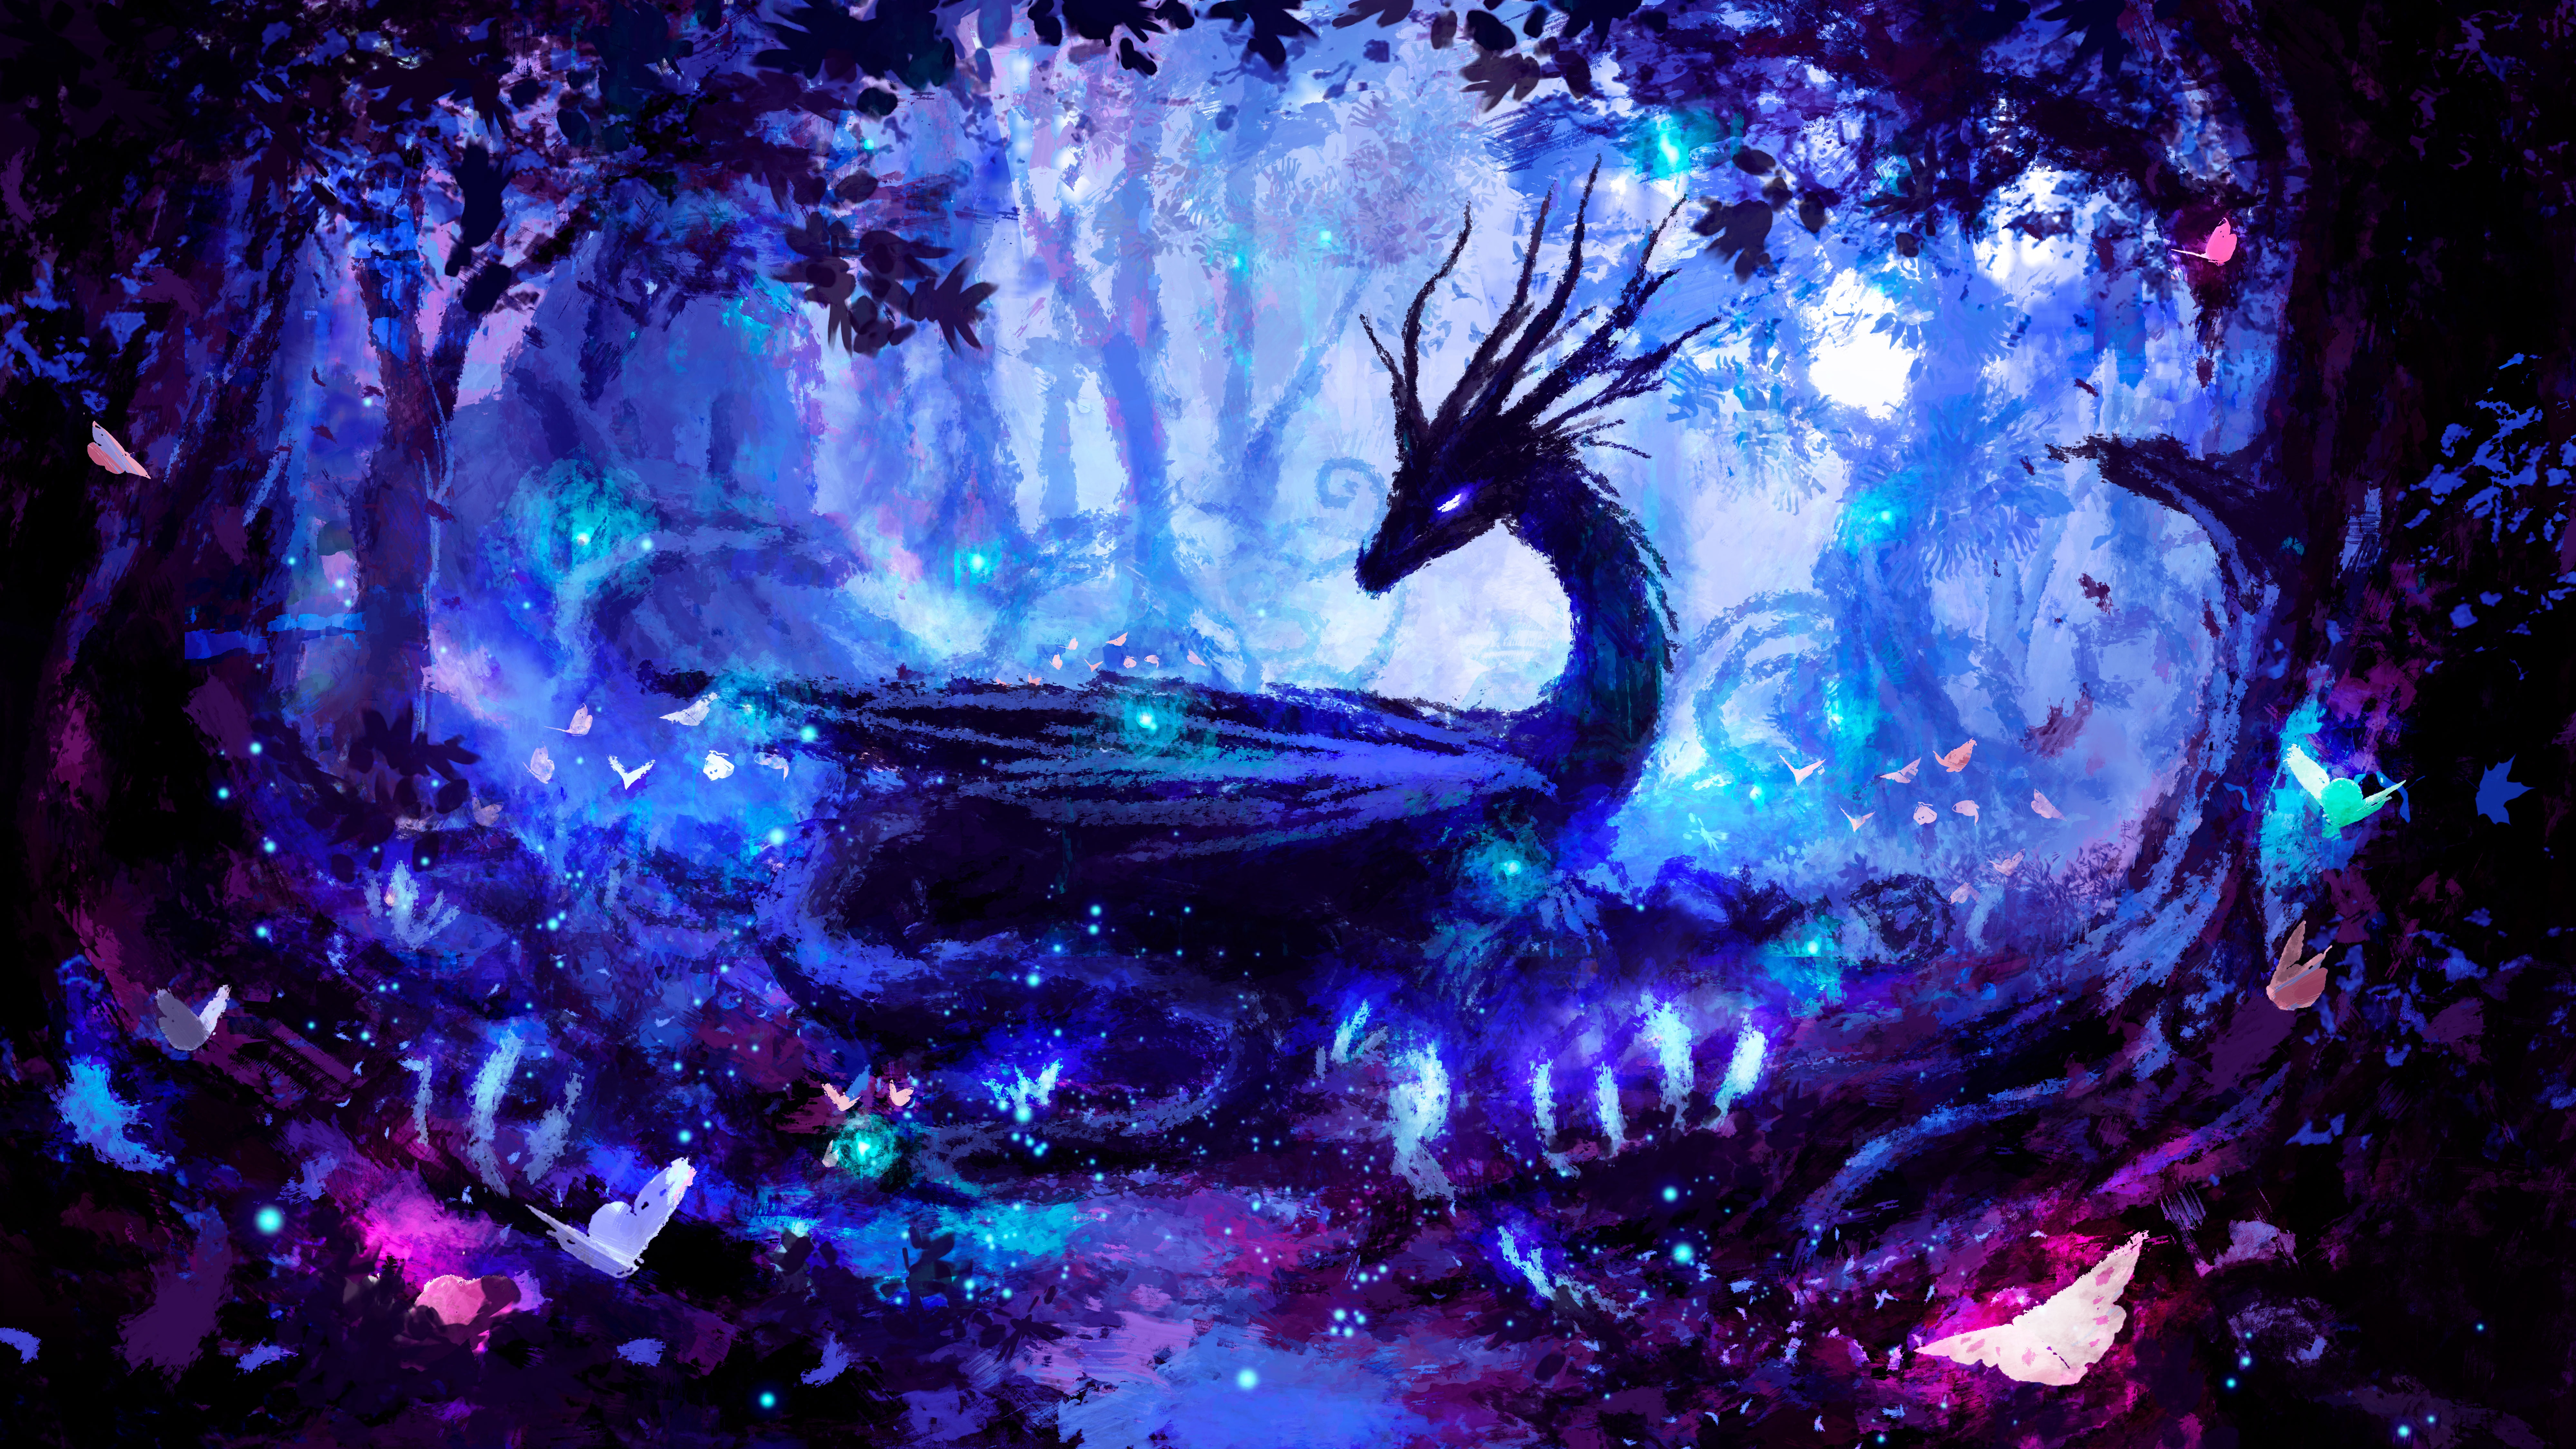 General 8000x4500 digital art colorful artwork lights dragon forest night magic trees horns pink blue evening creature butterfly mist fireflies watercolor